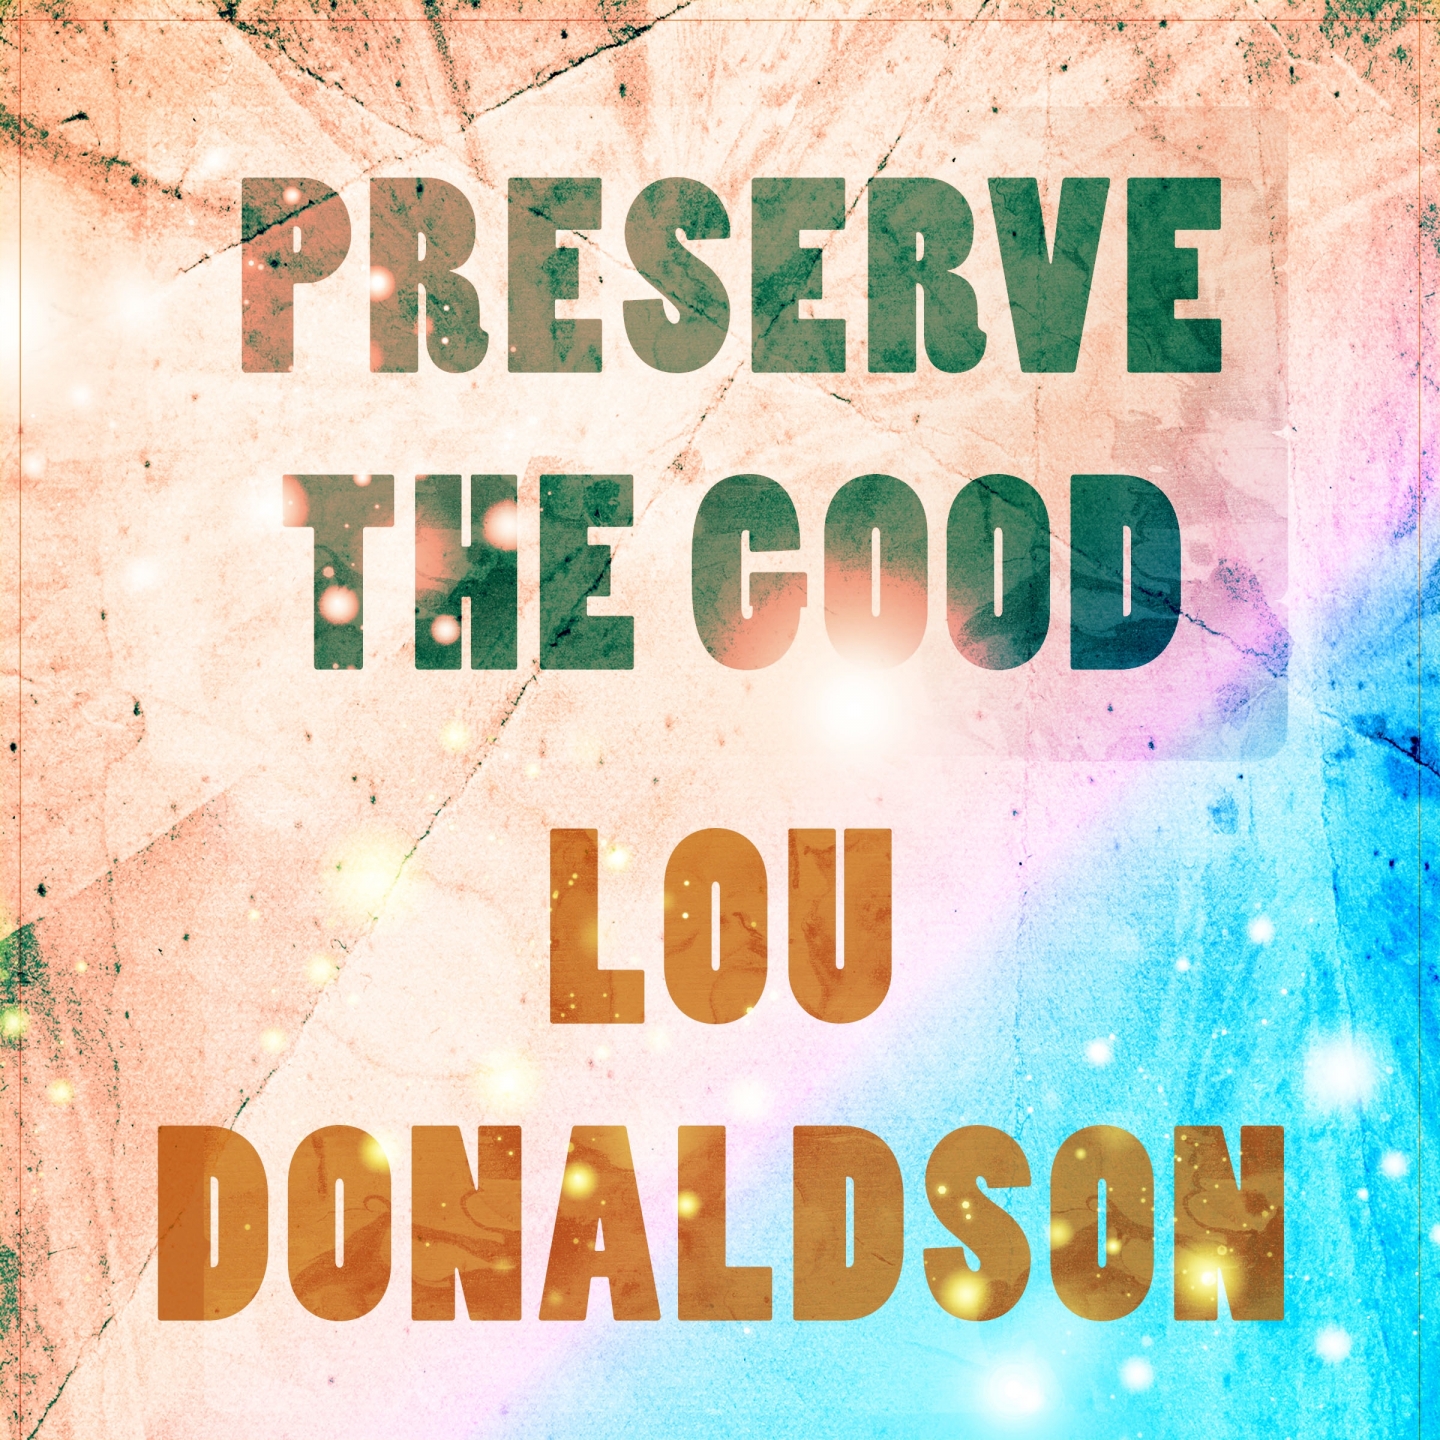 Preserve The Good